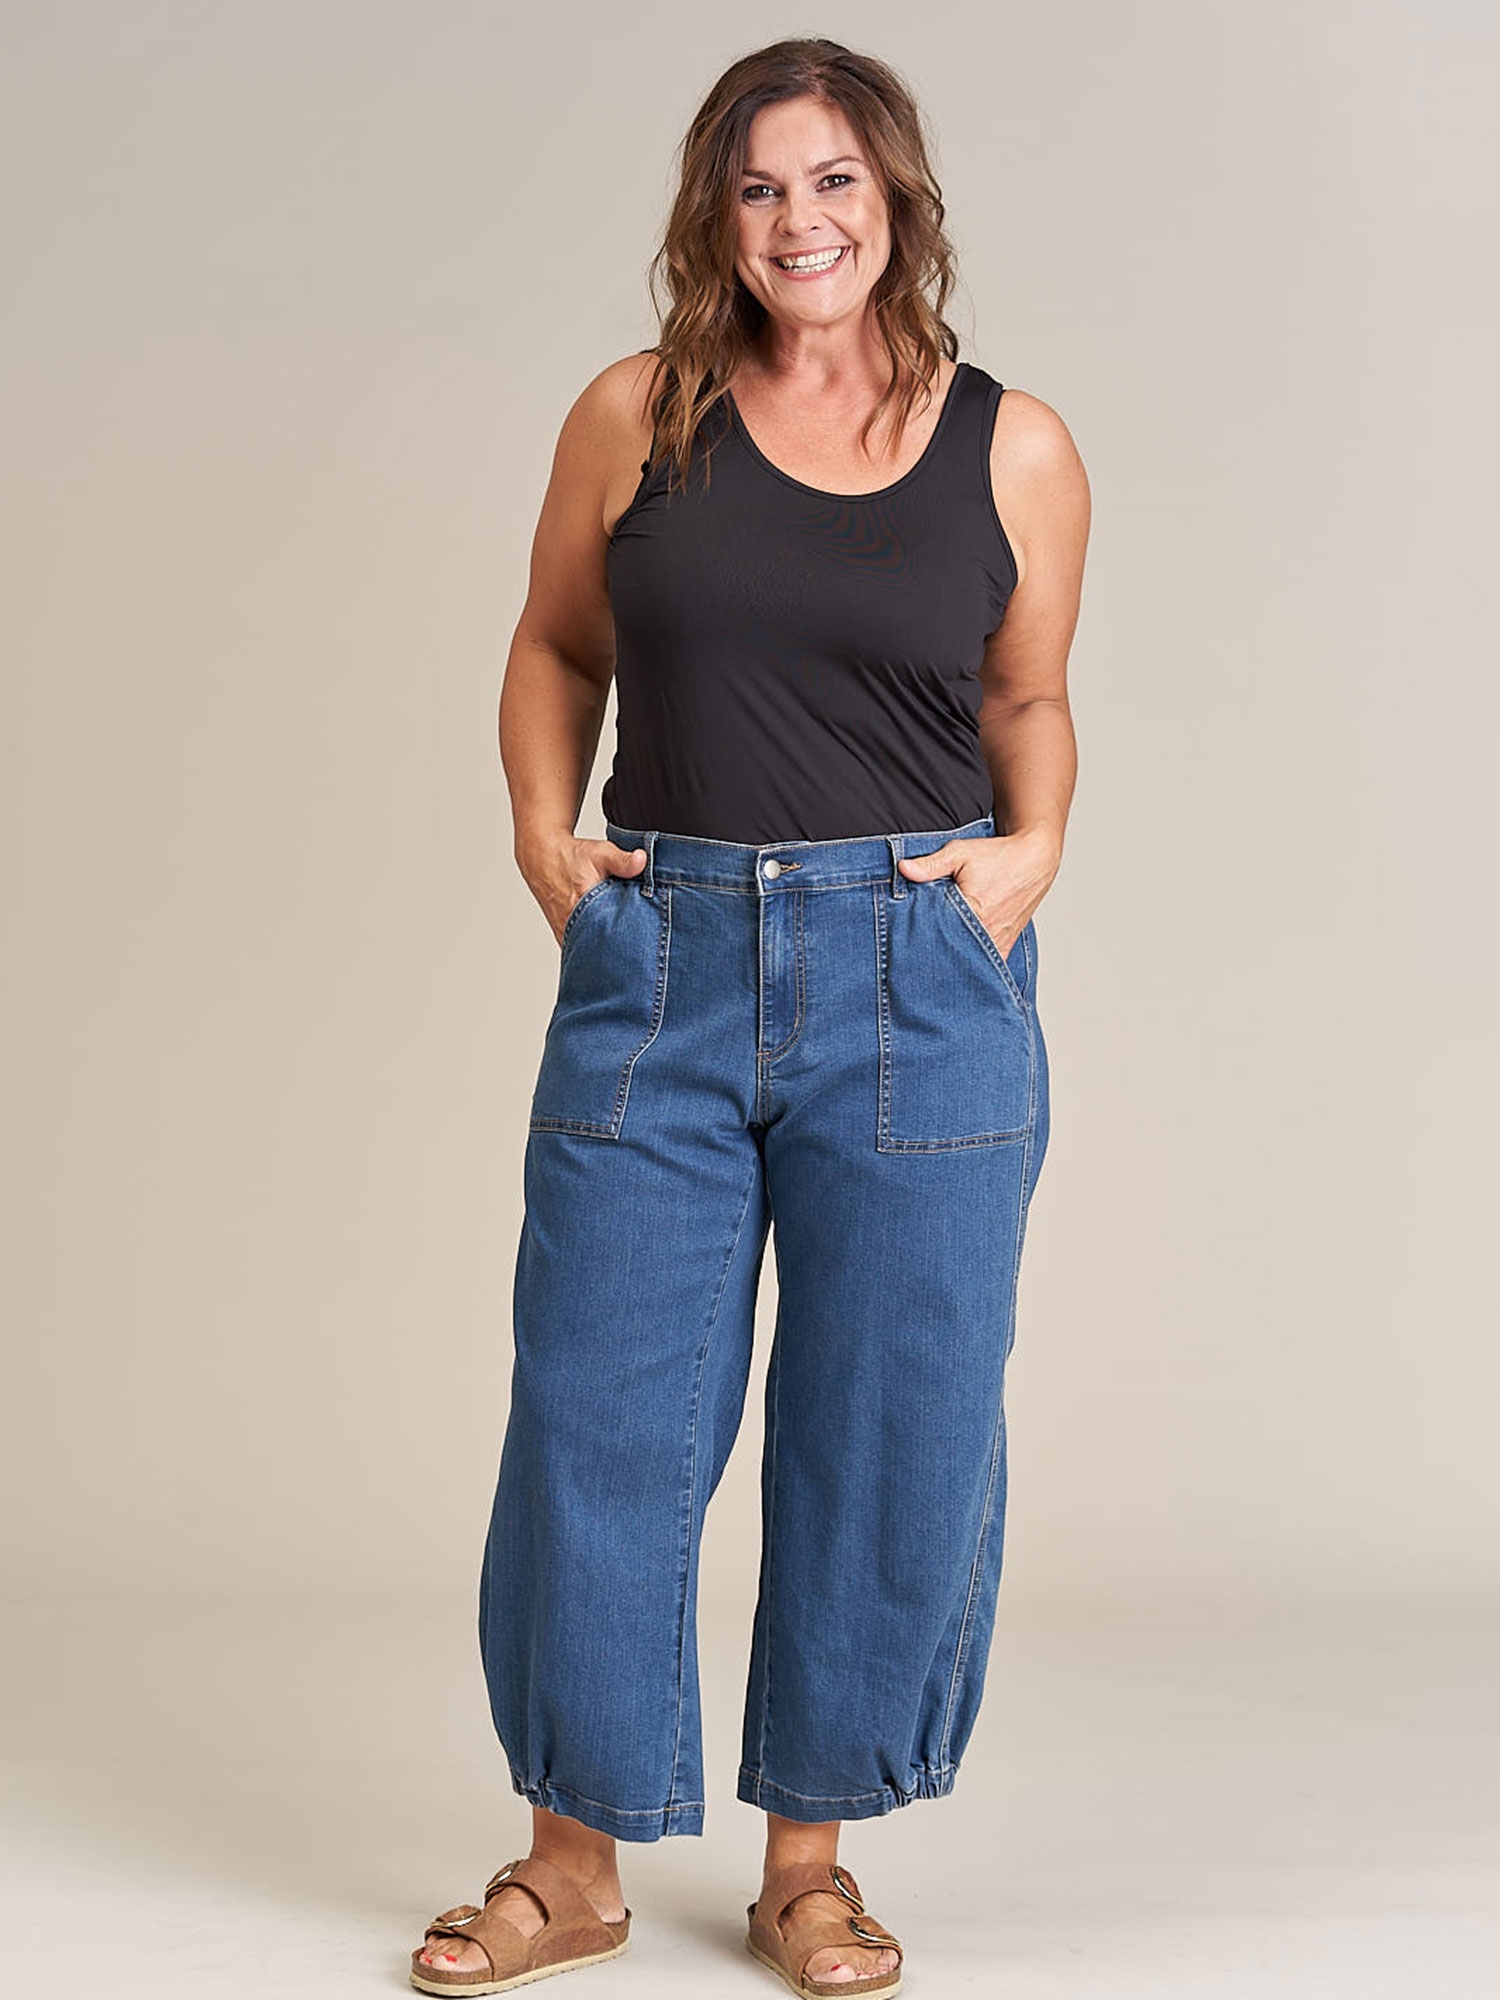 CLARA - Løse rummelige denim jeans / baggy pants fra Gozzip